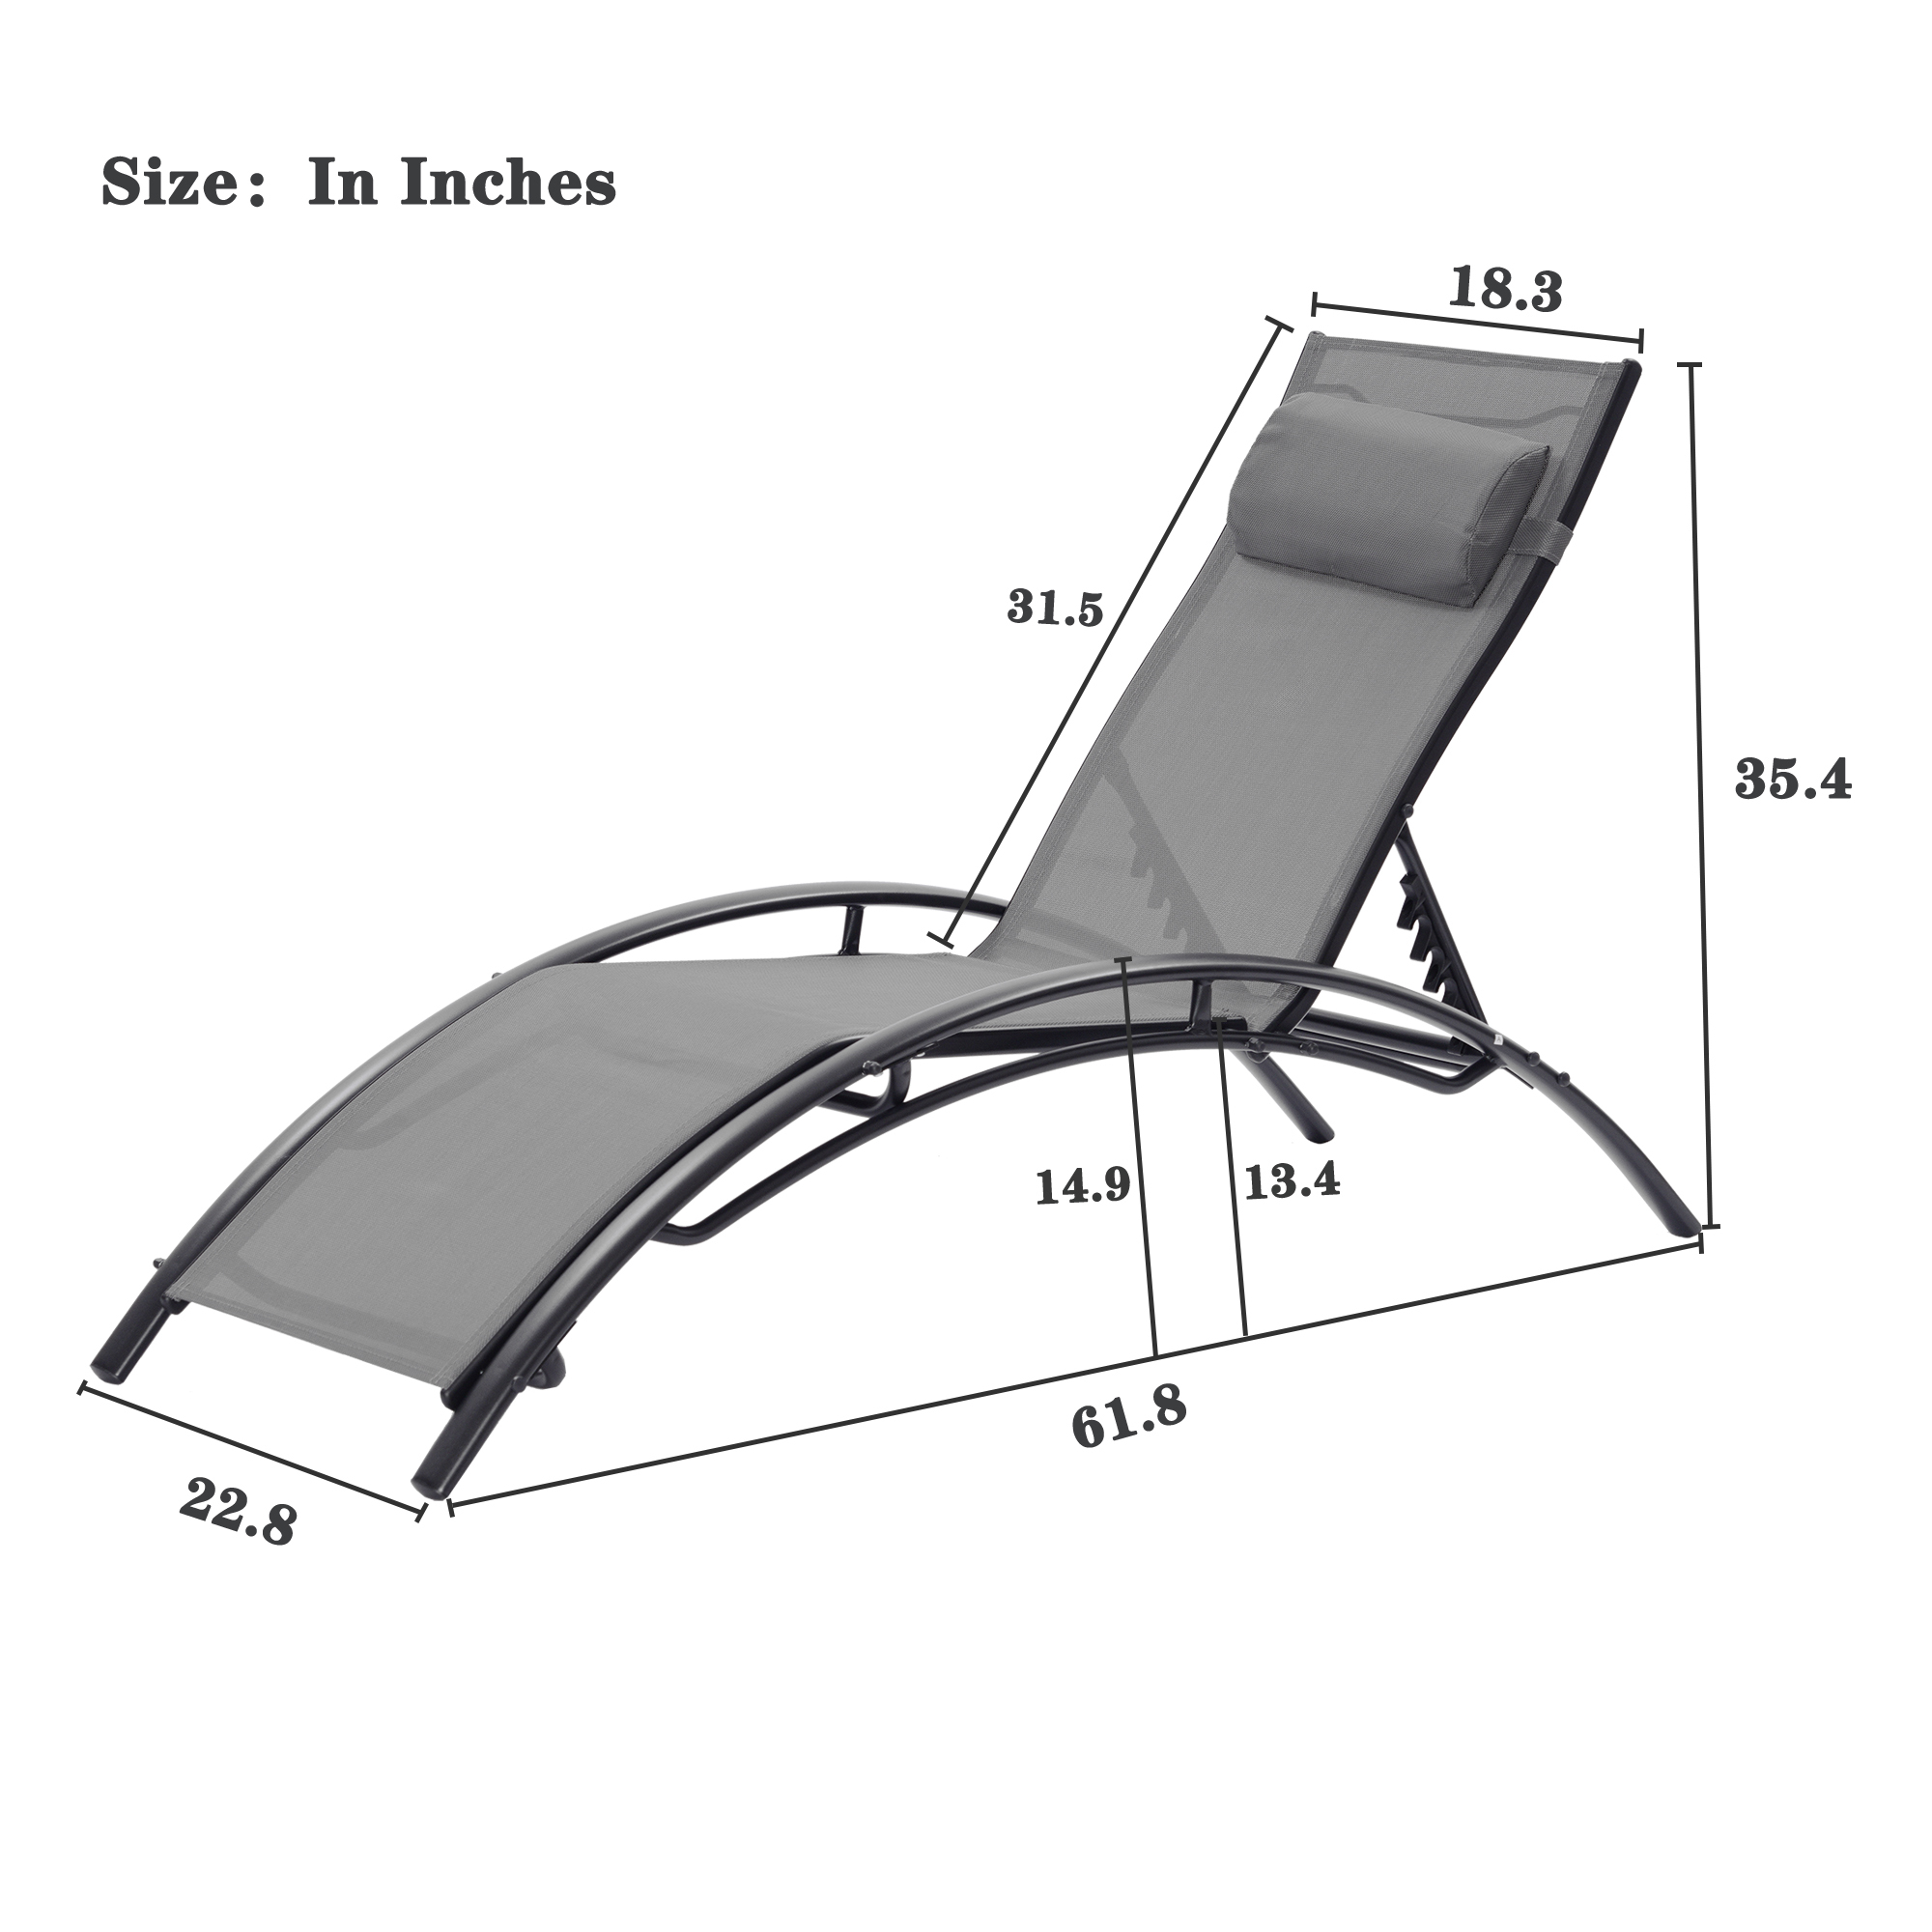 Hassch 2PCS Outdoor Chaise Lounges Aluminum Recliner Chair Beach Sun Chair, Gray - image 3 of 10